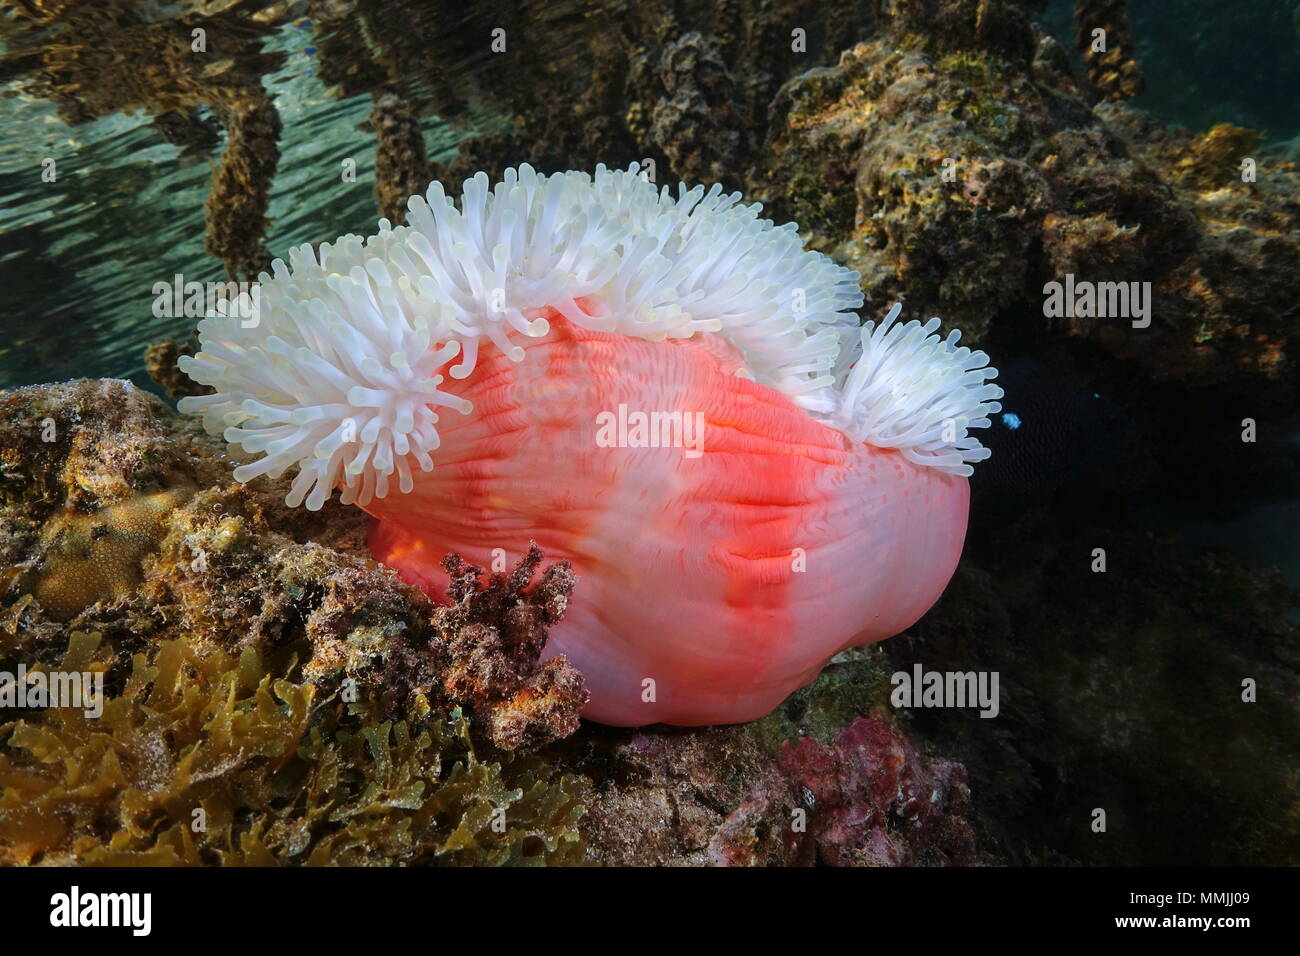 A Magnificent sea anemone underwater, Heteractis magnifica, Pacific ocean, Polynesia, American Samoa Stock Photo